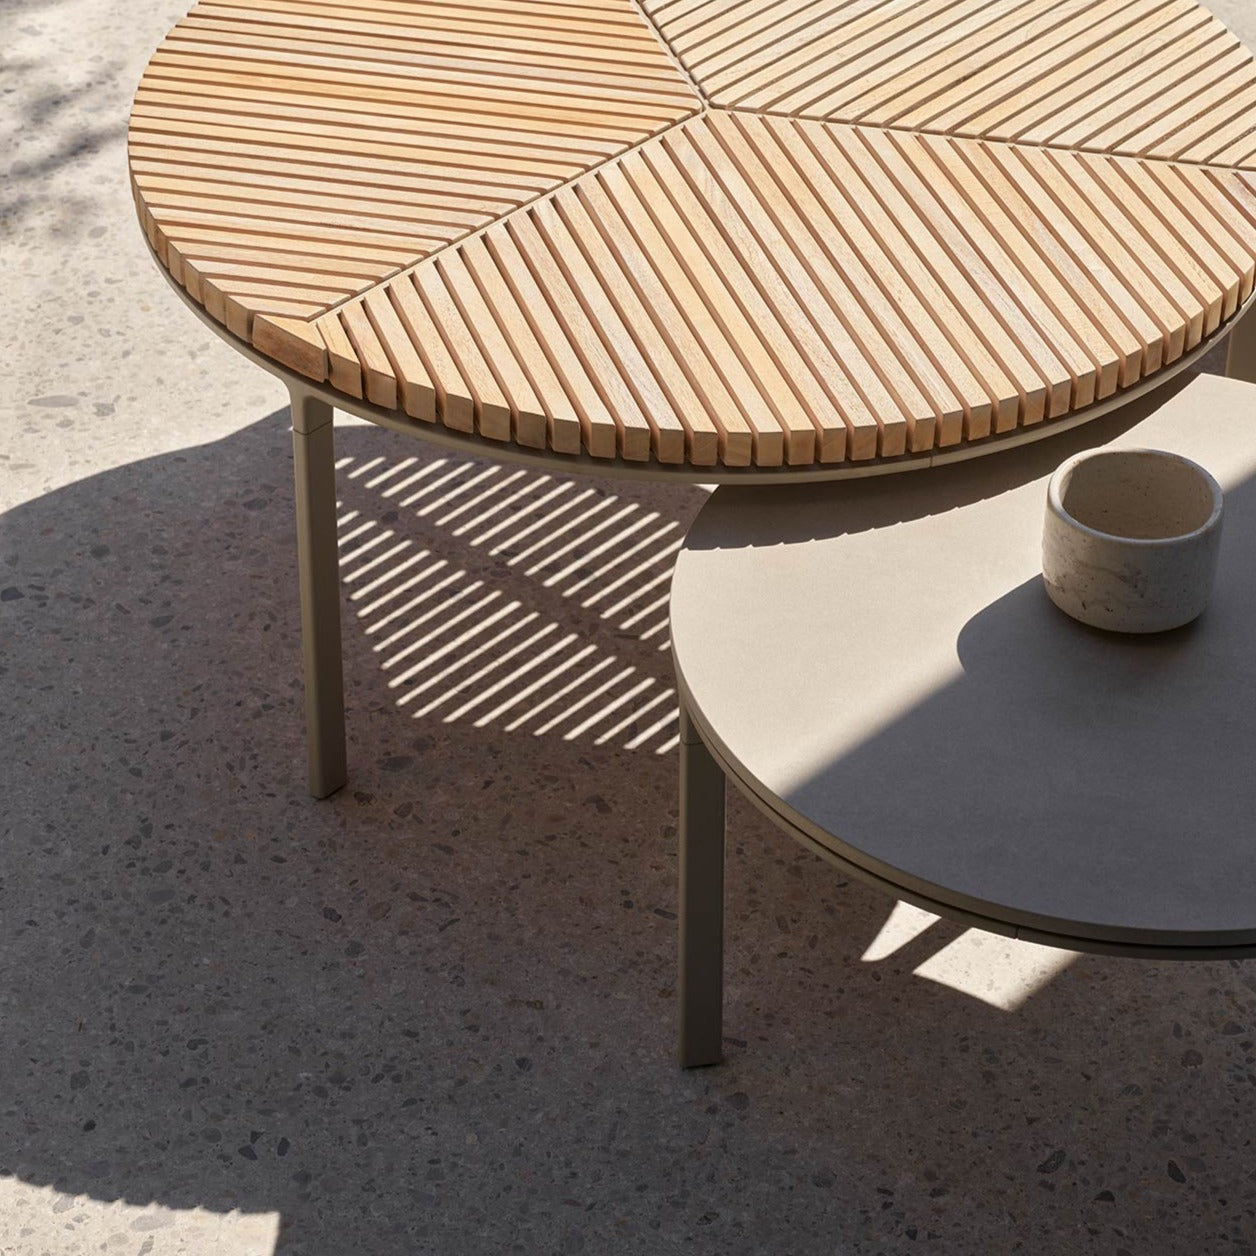 Vipp Open Air Coffee Table 60cm